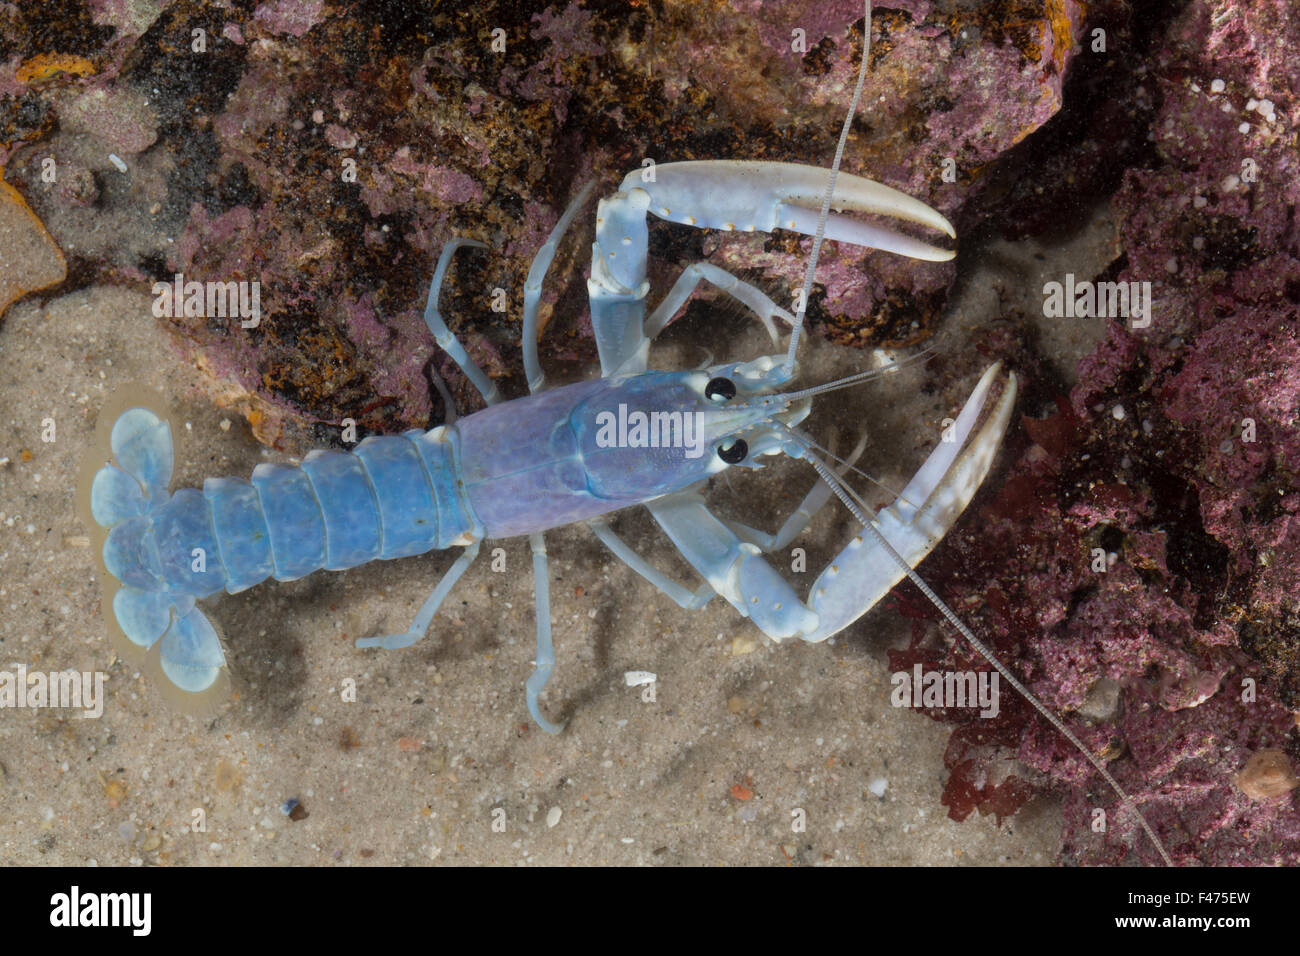 Aragosta comune, europea artigliato aragosta, Maine lobster, Europäischer Hummer, Homarus gammarus, Homarus vulgaris Foto Stock